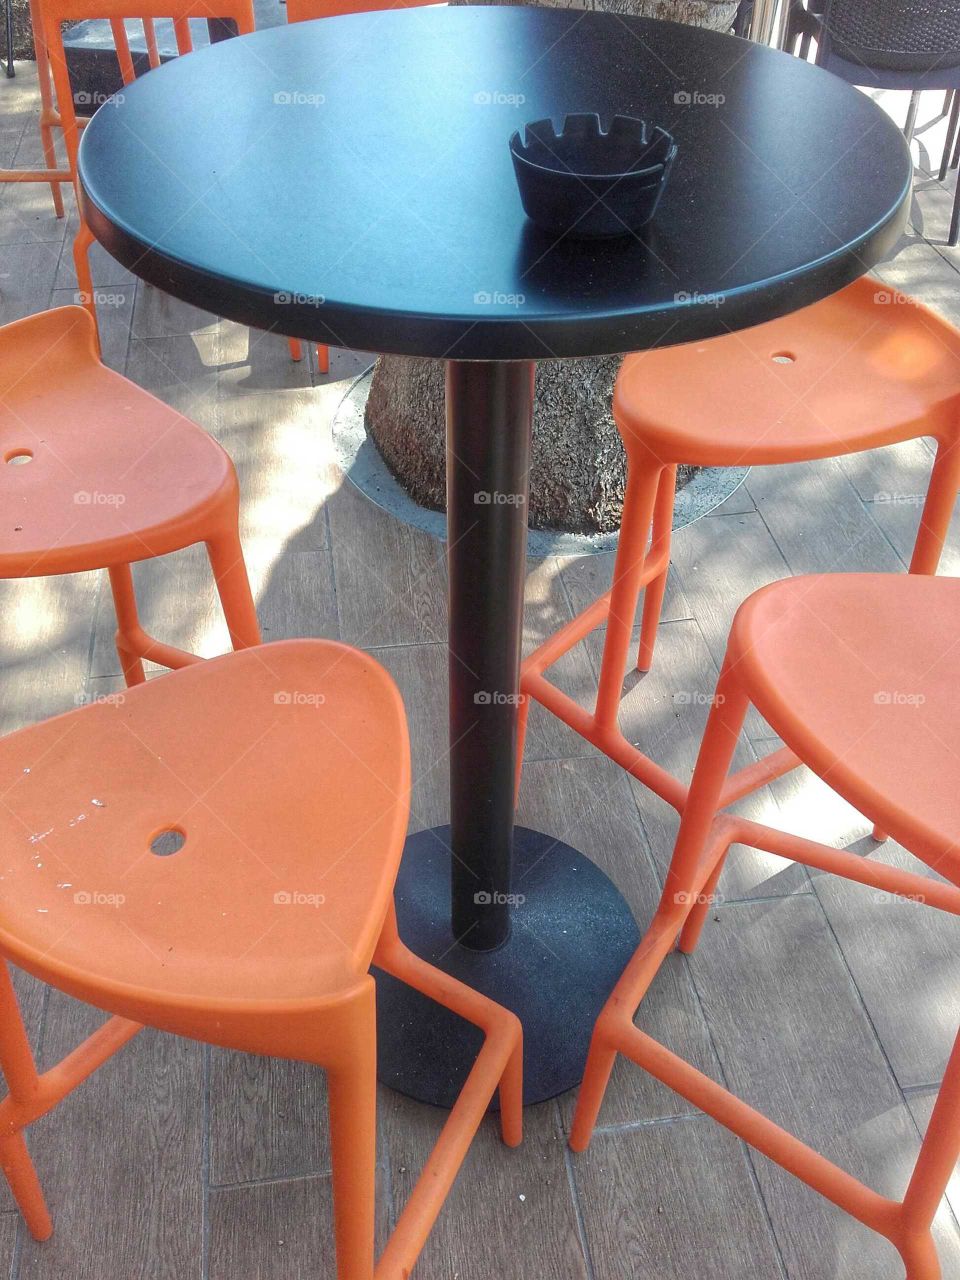 Black table with orange stools